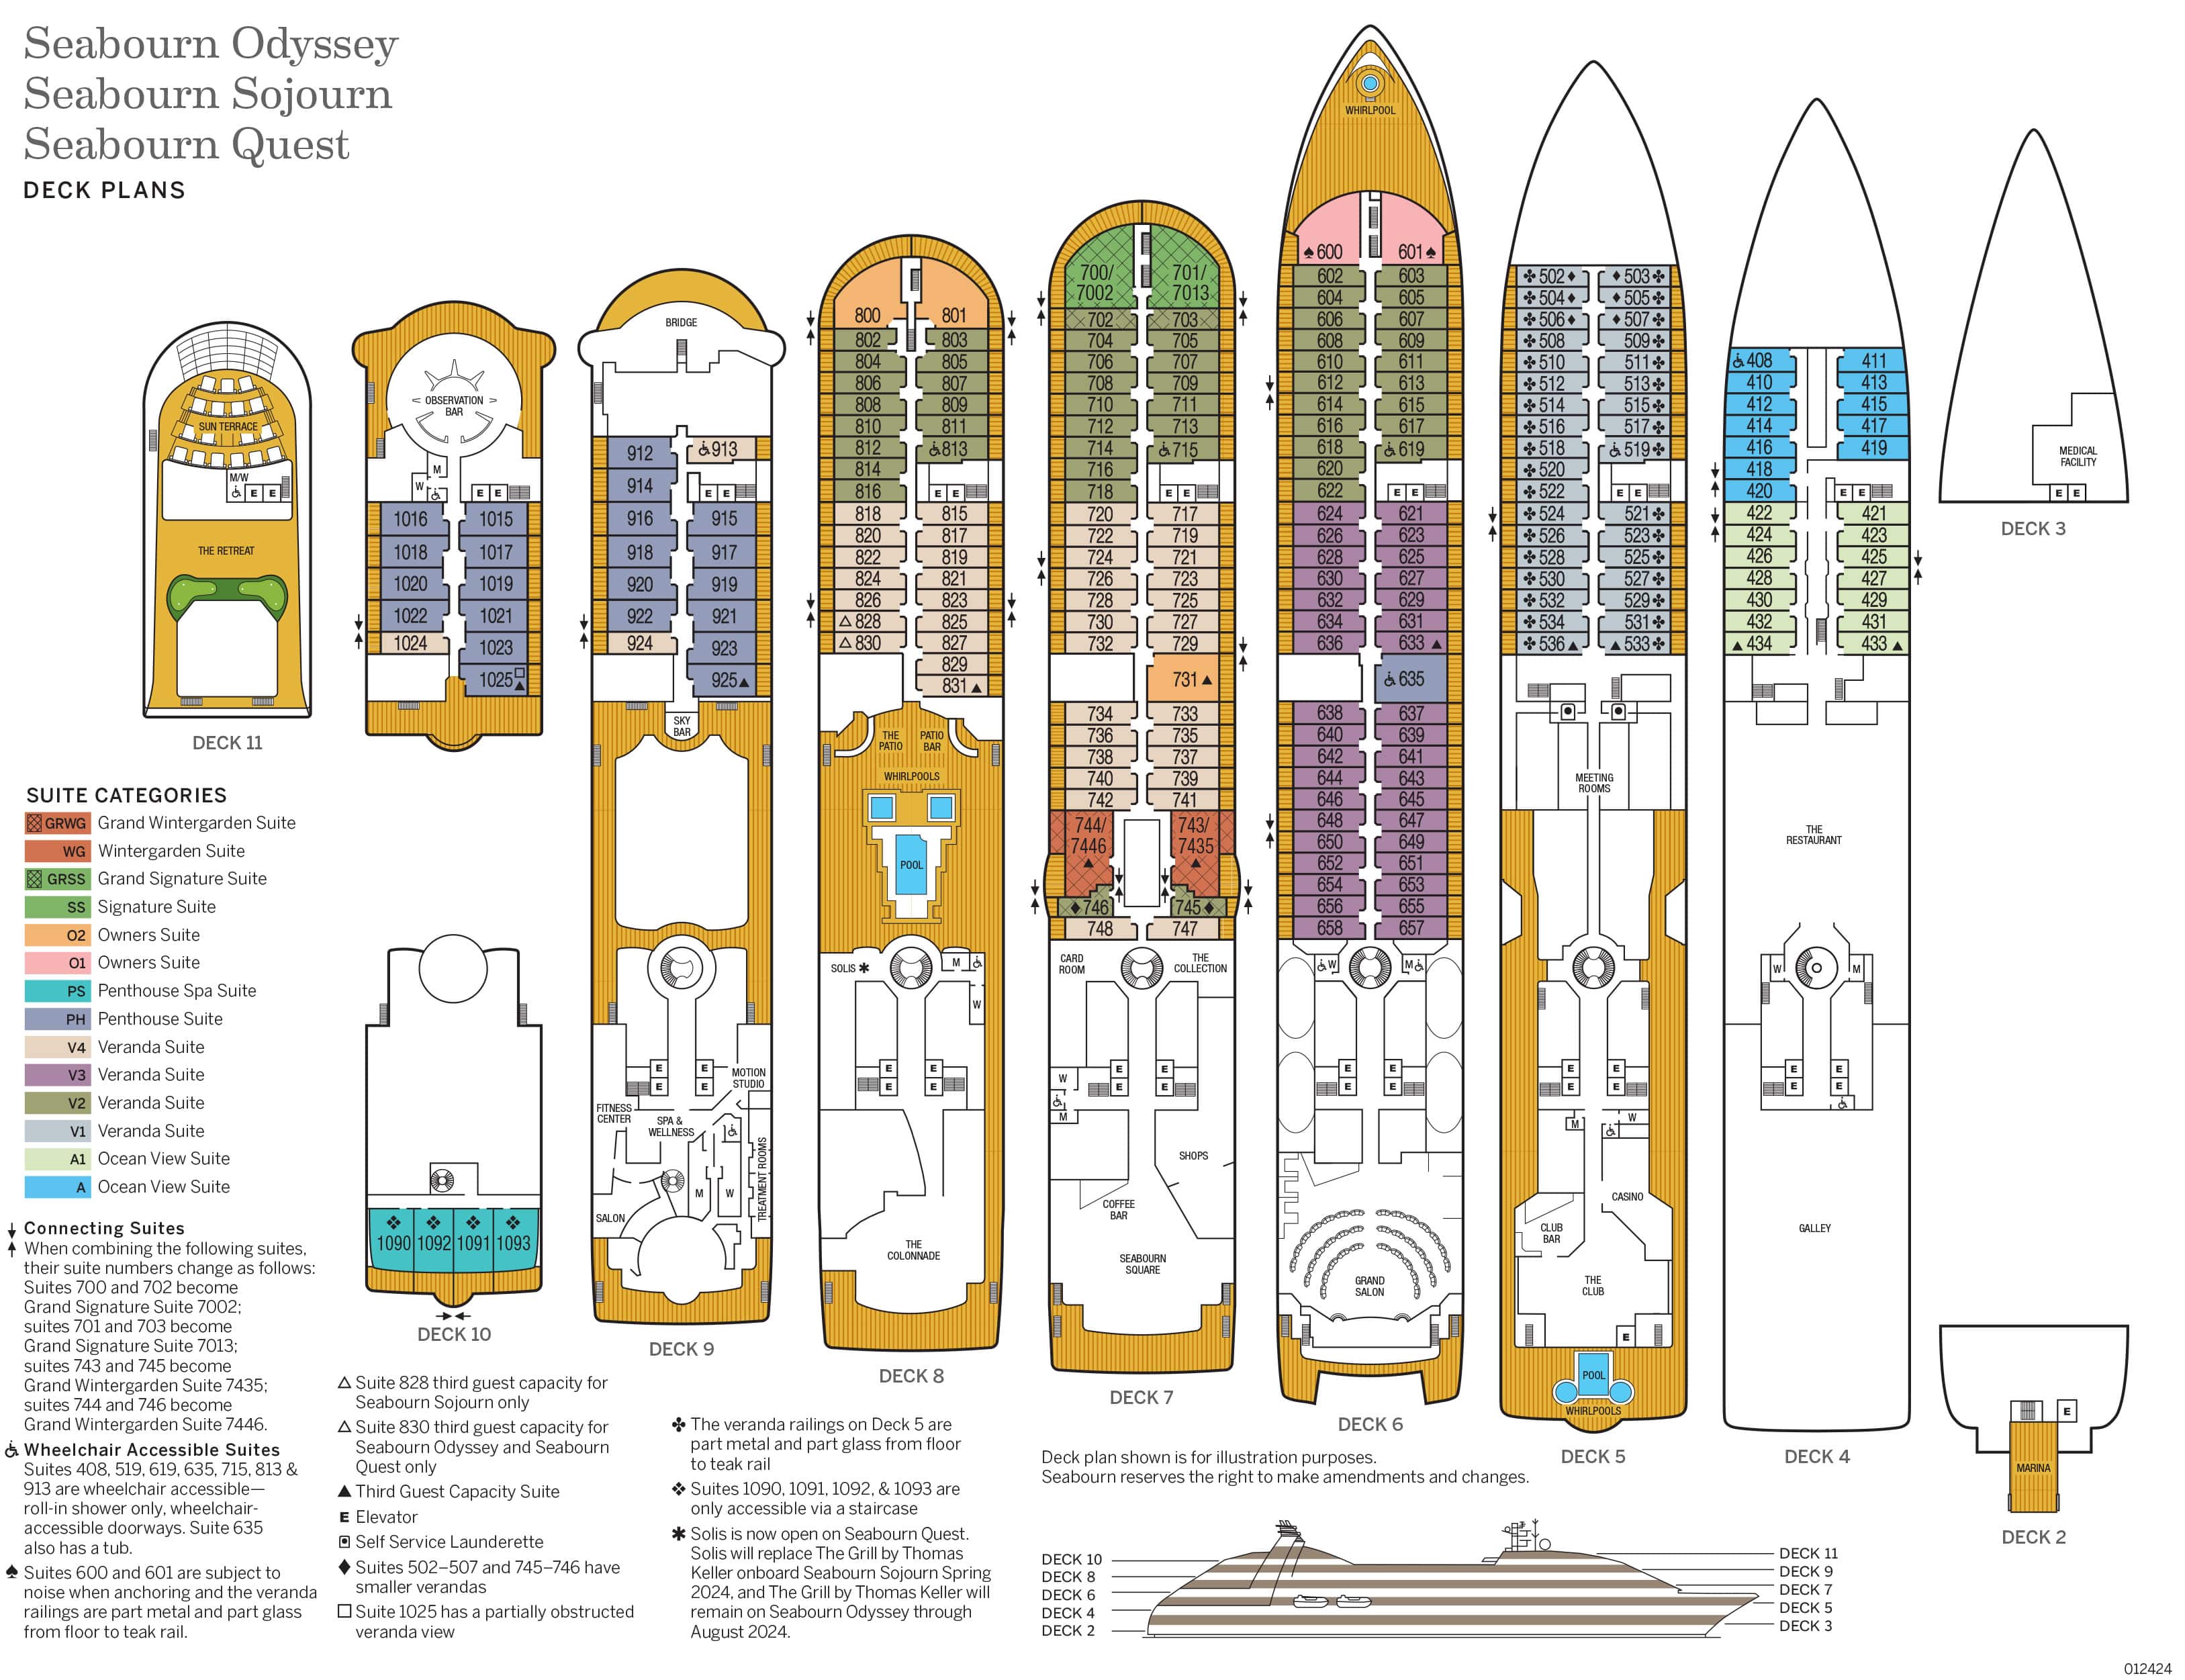 Odyssey Deck Plans